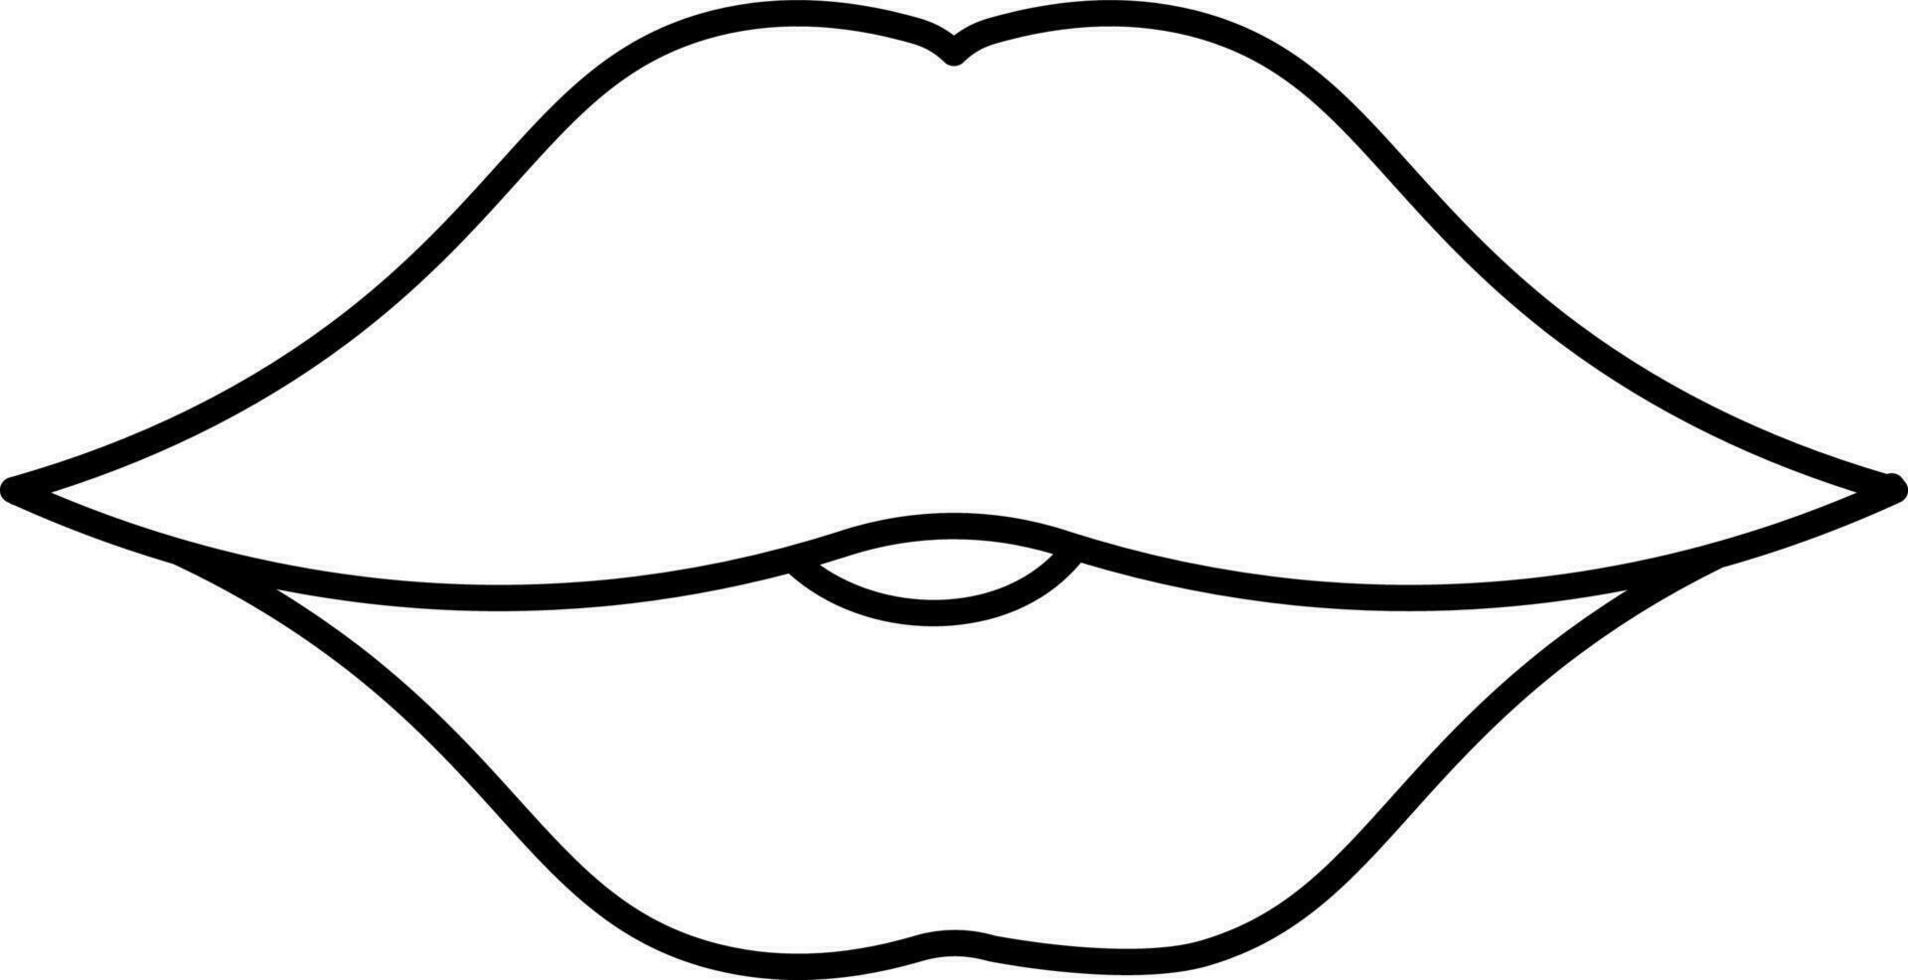 Preto linear estilo beijo ícone ou símbolo. vetor